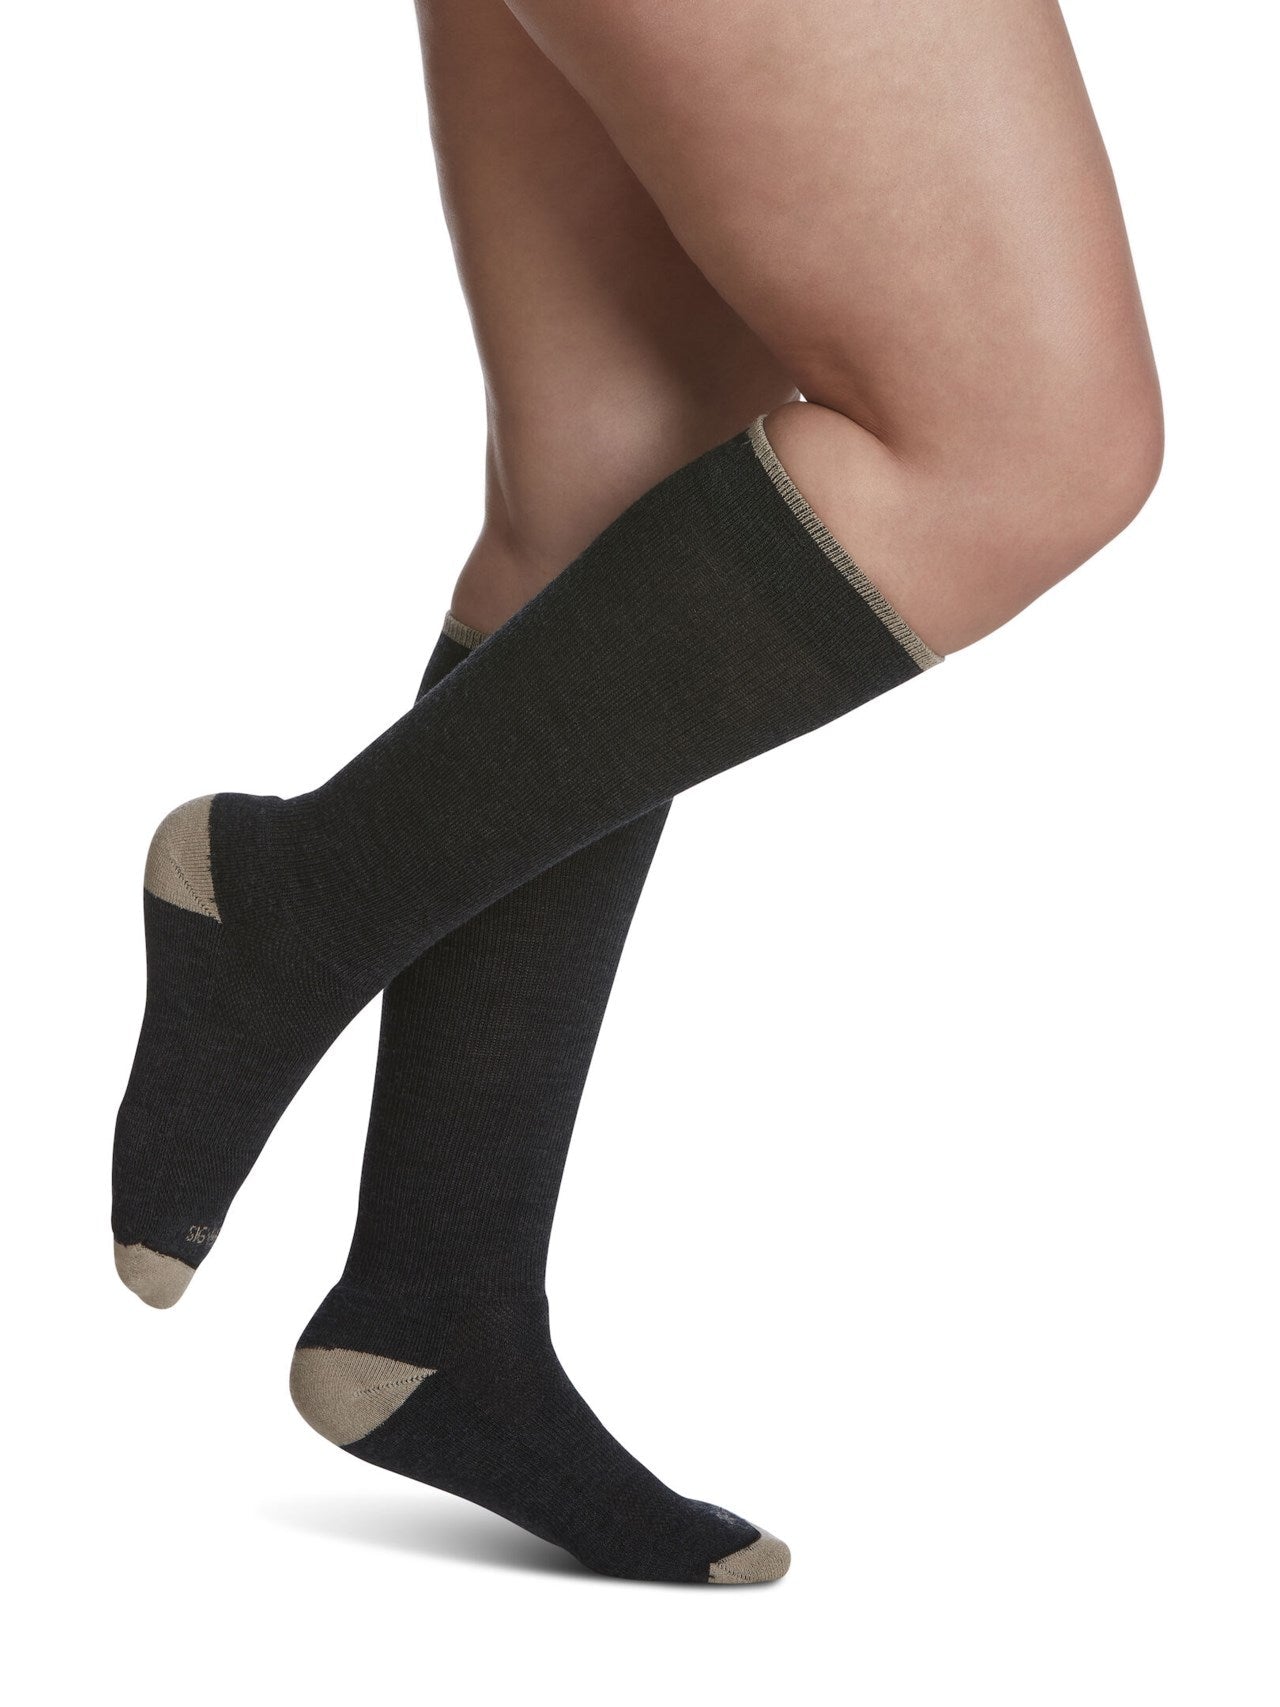 Sigvaris 420 Merino Outdoor Compression Socks 15-20 mmHg Calf High For Unisex Closed Toe